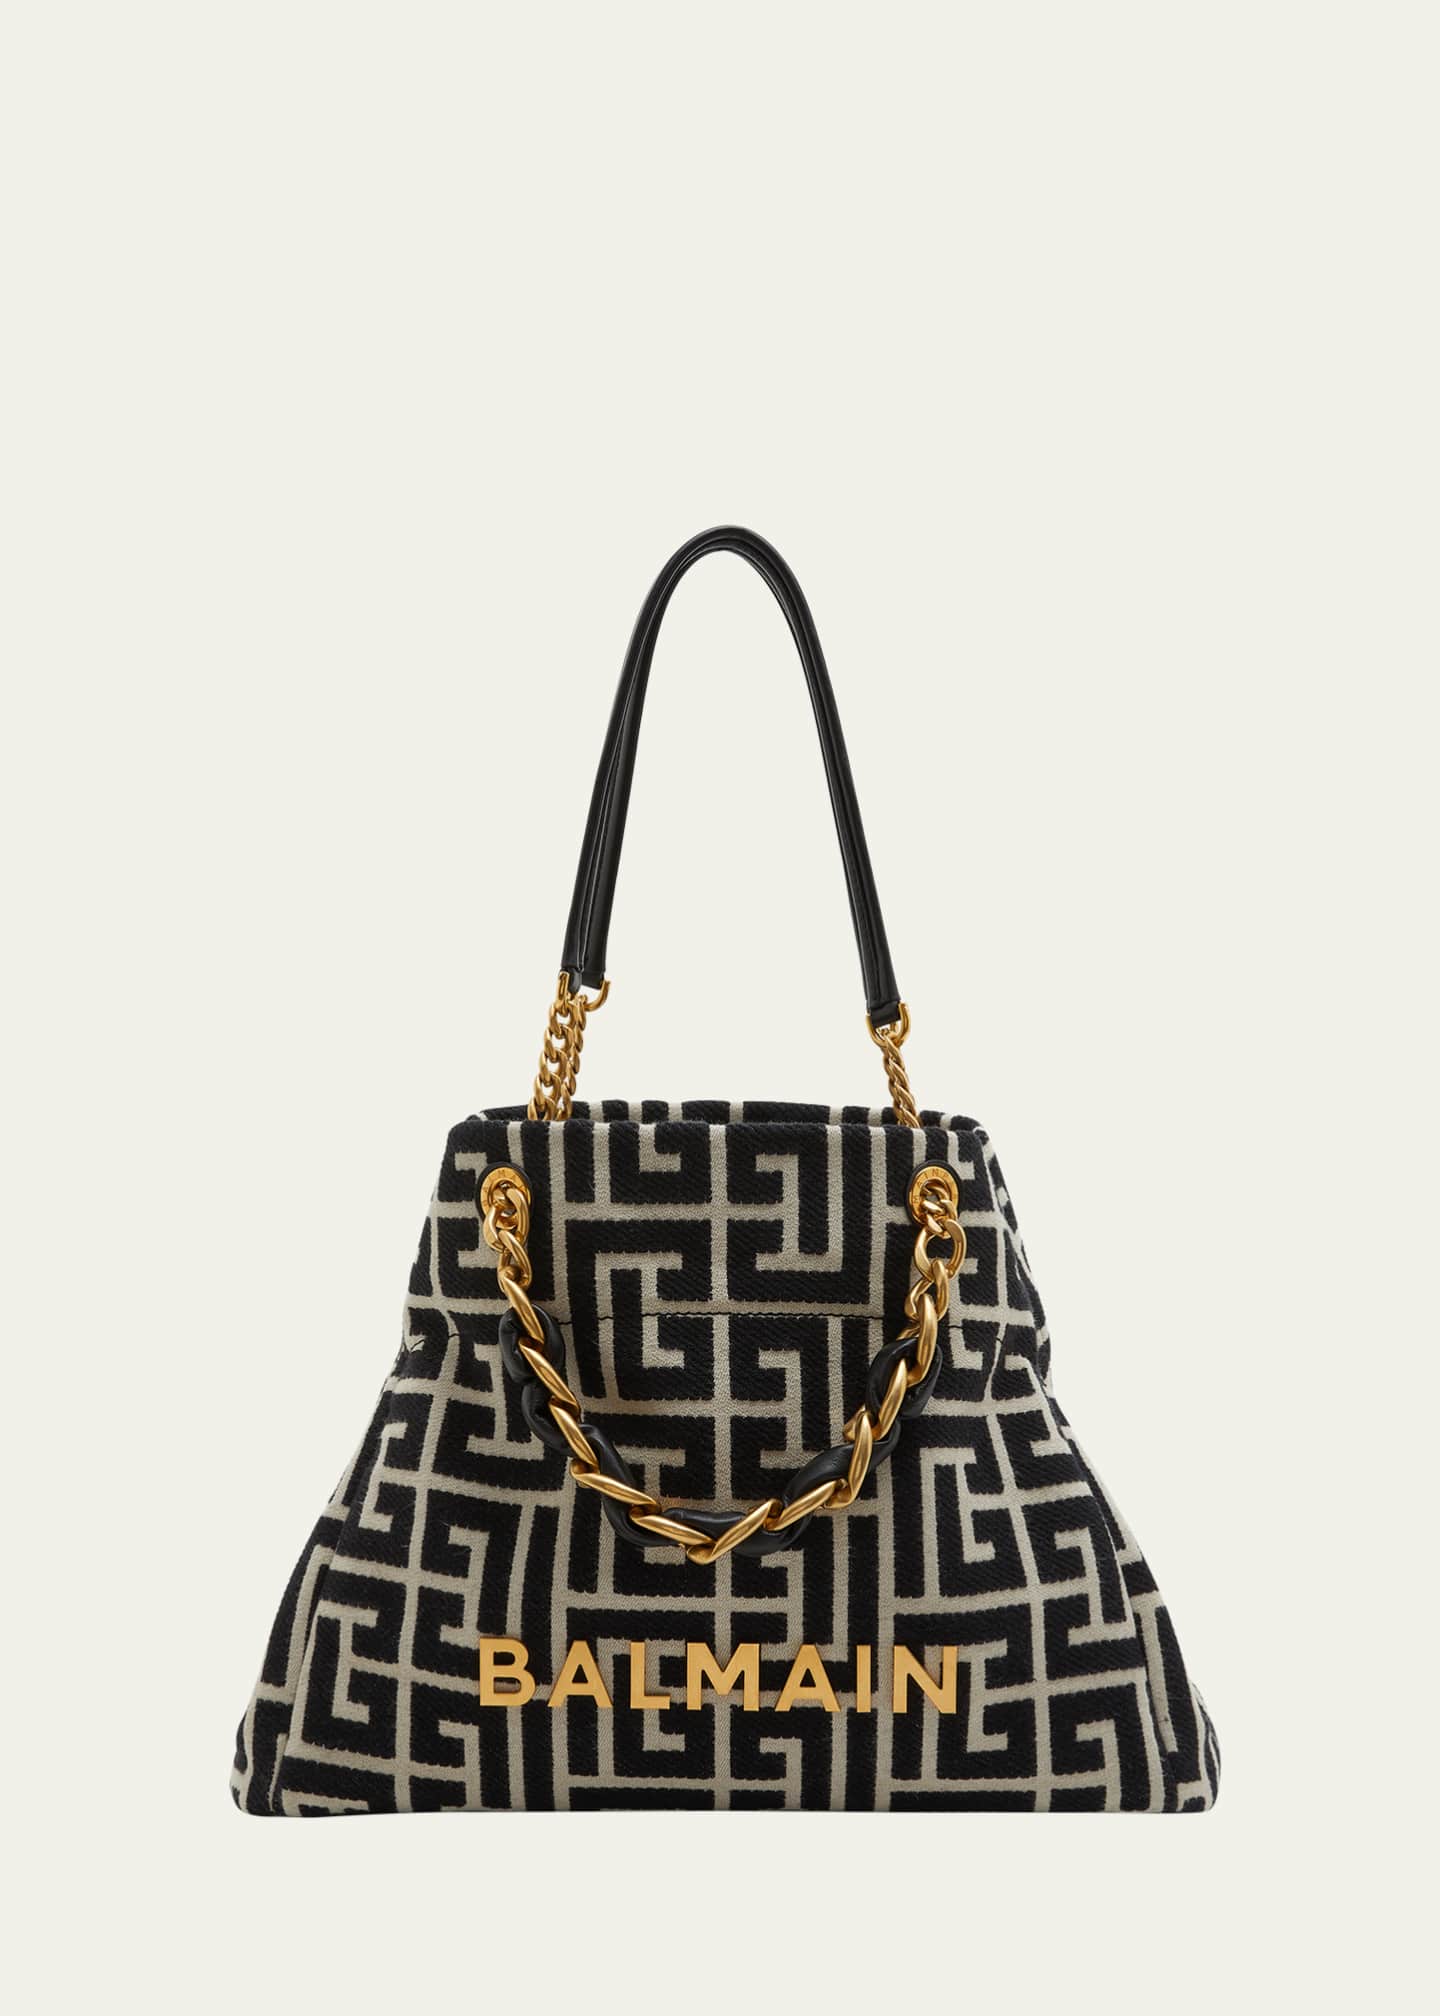 Designer Totes Women Luxury Shoulder Bag Shopping Bags Jacquard